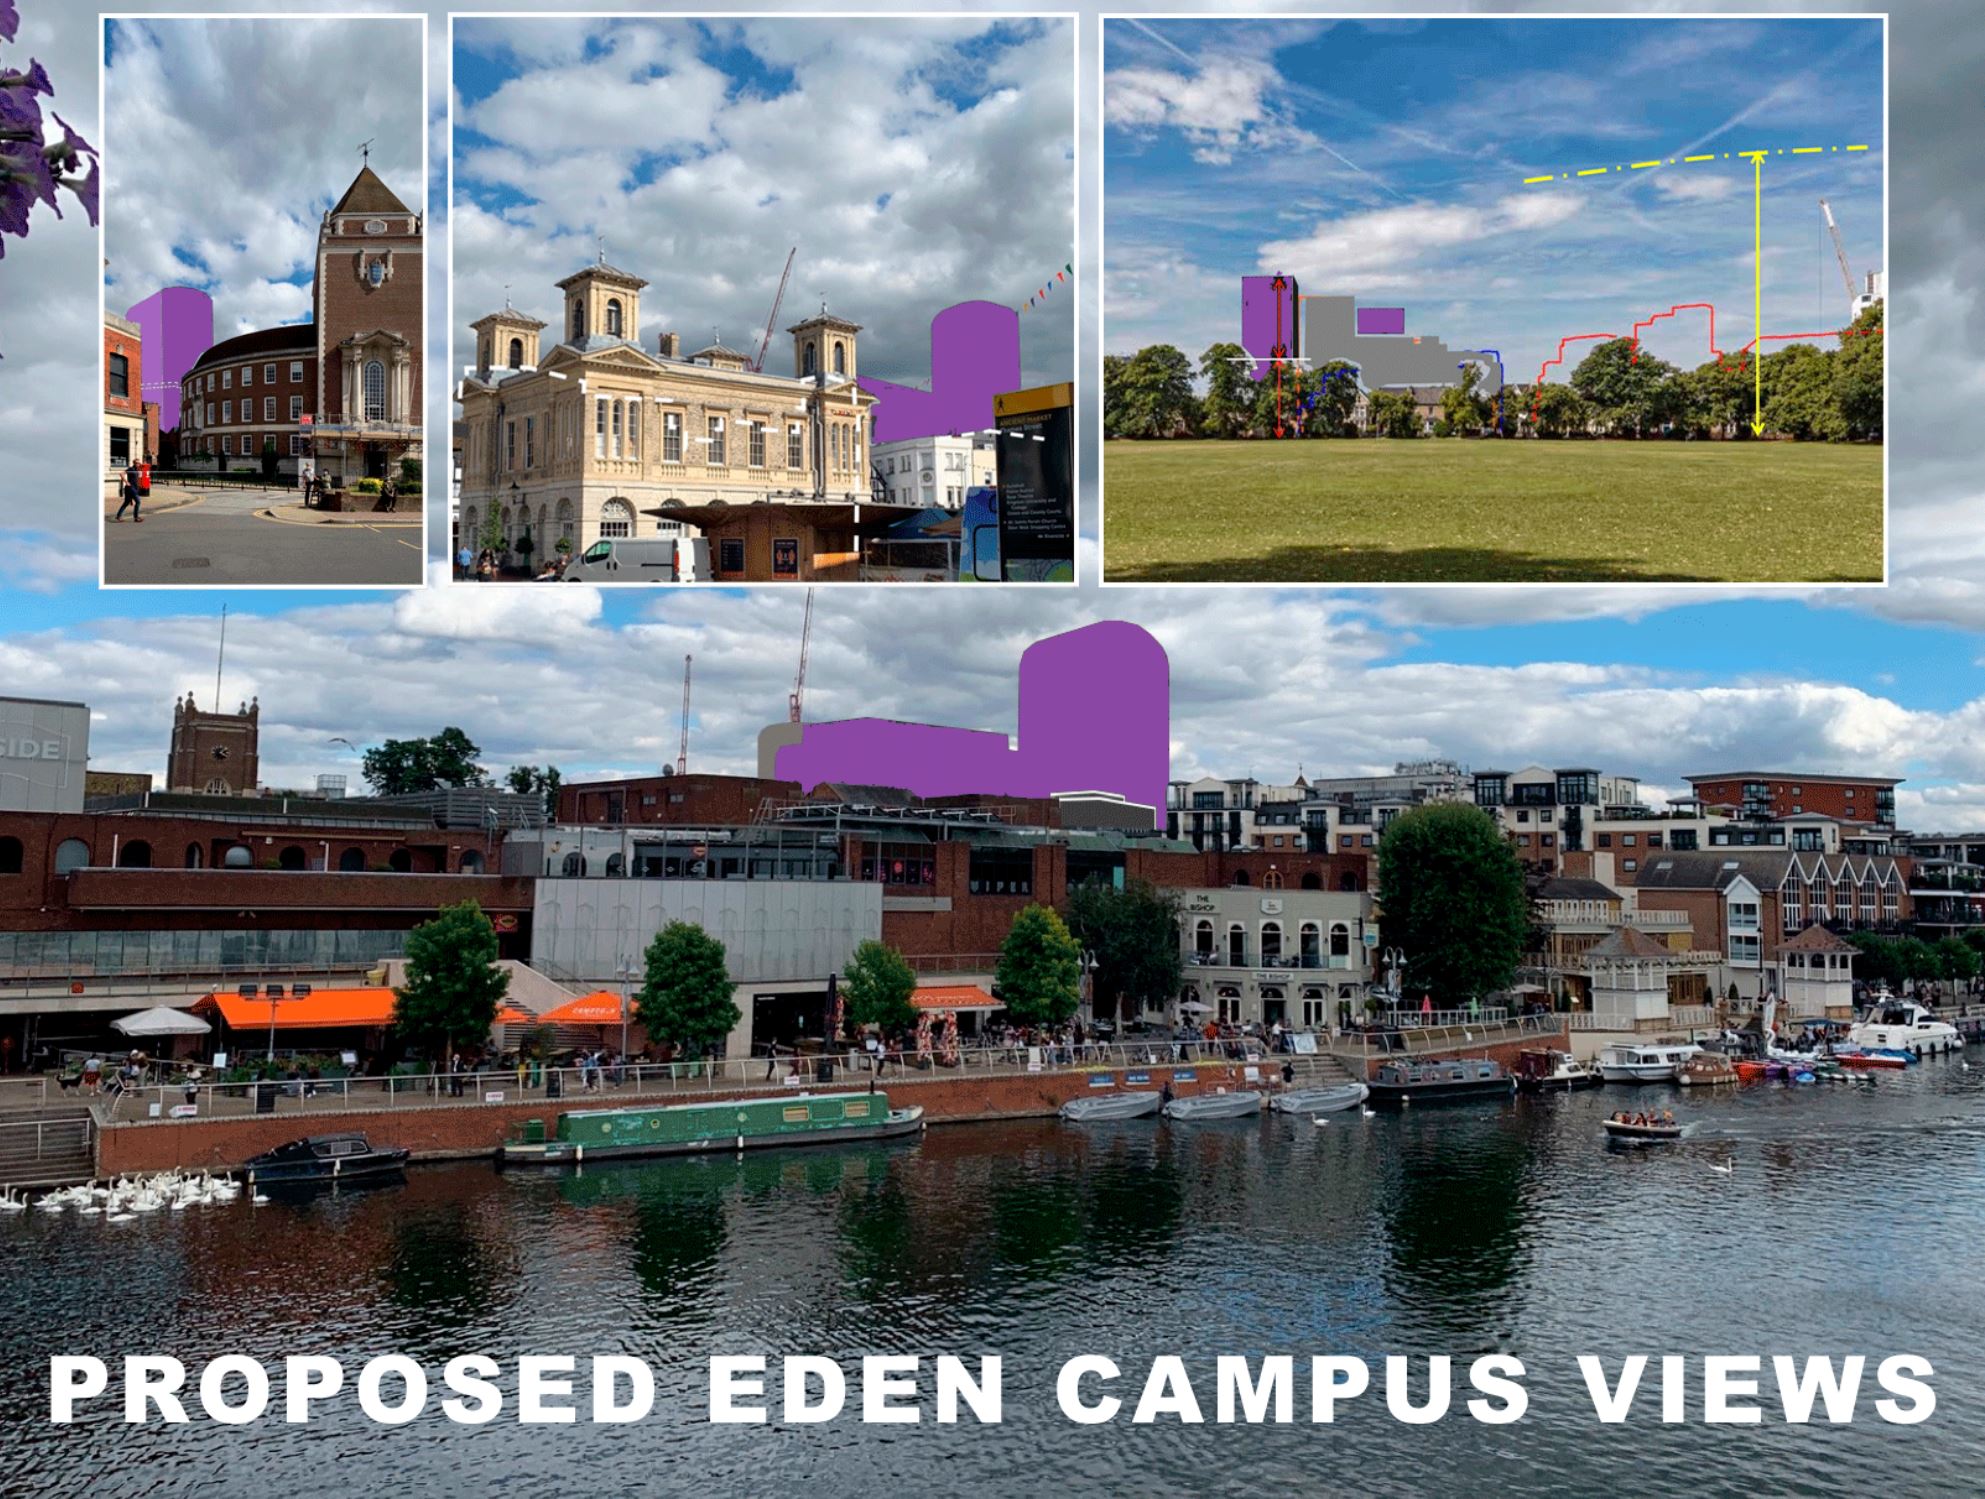 Eden Campus impact - picture from Edencampusviews.co.uk website